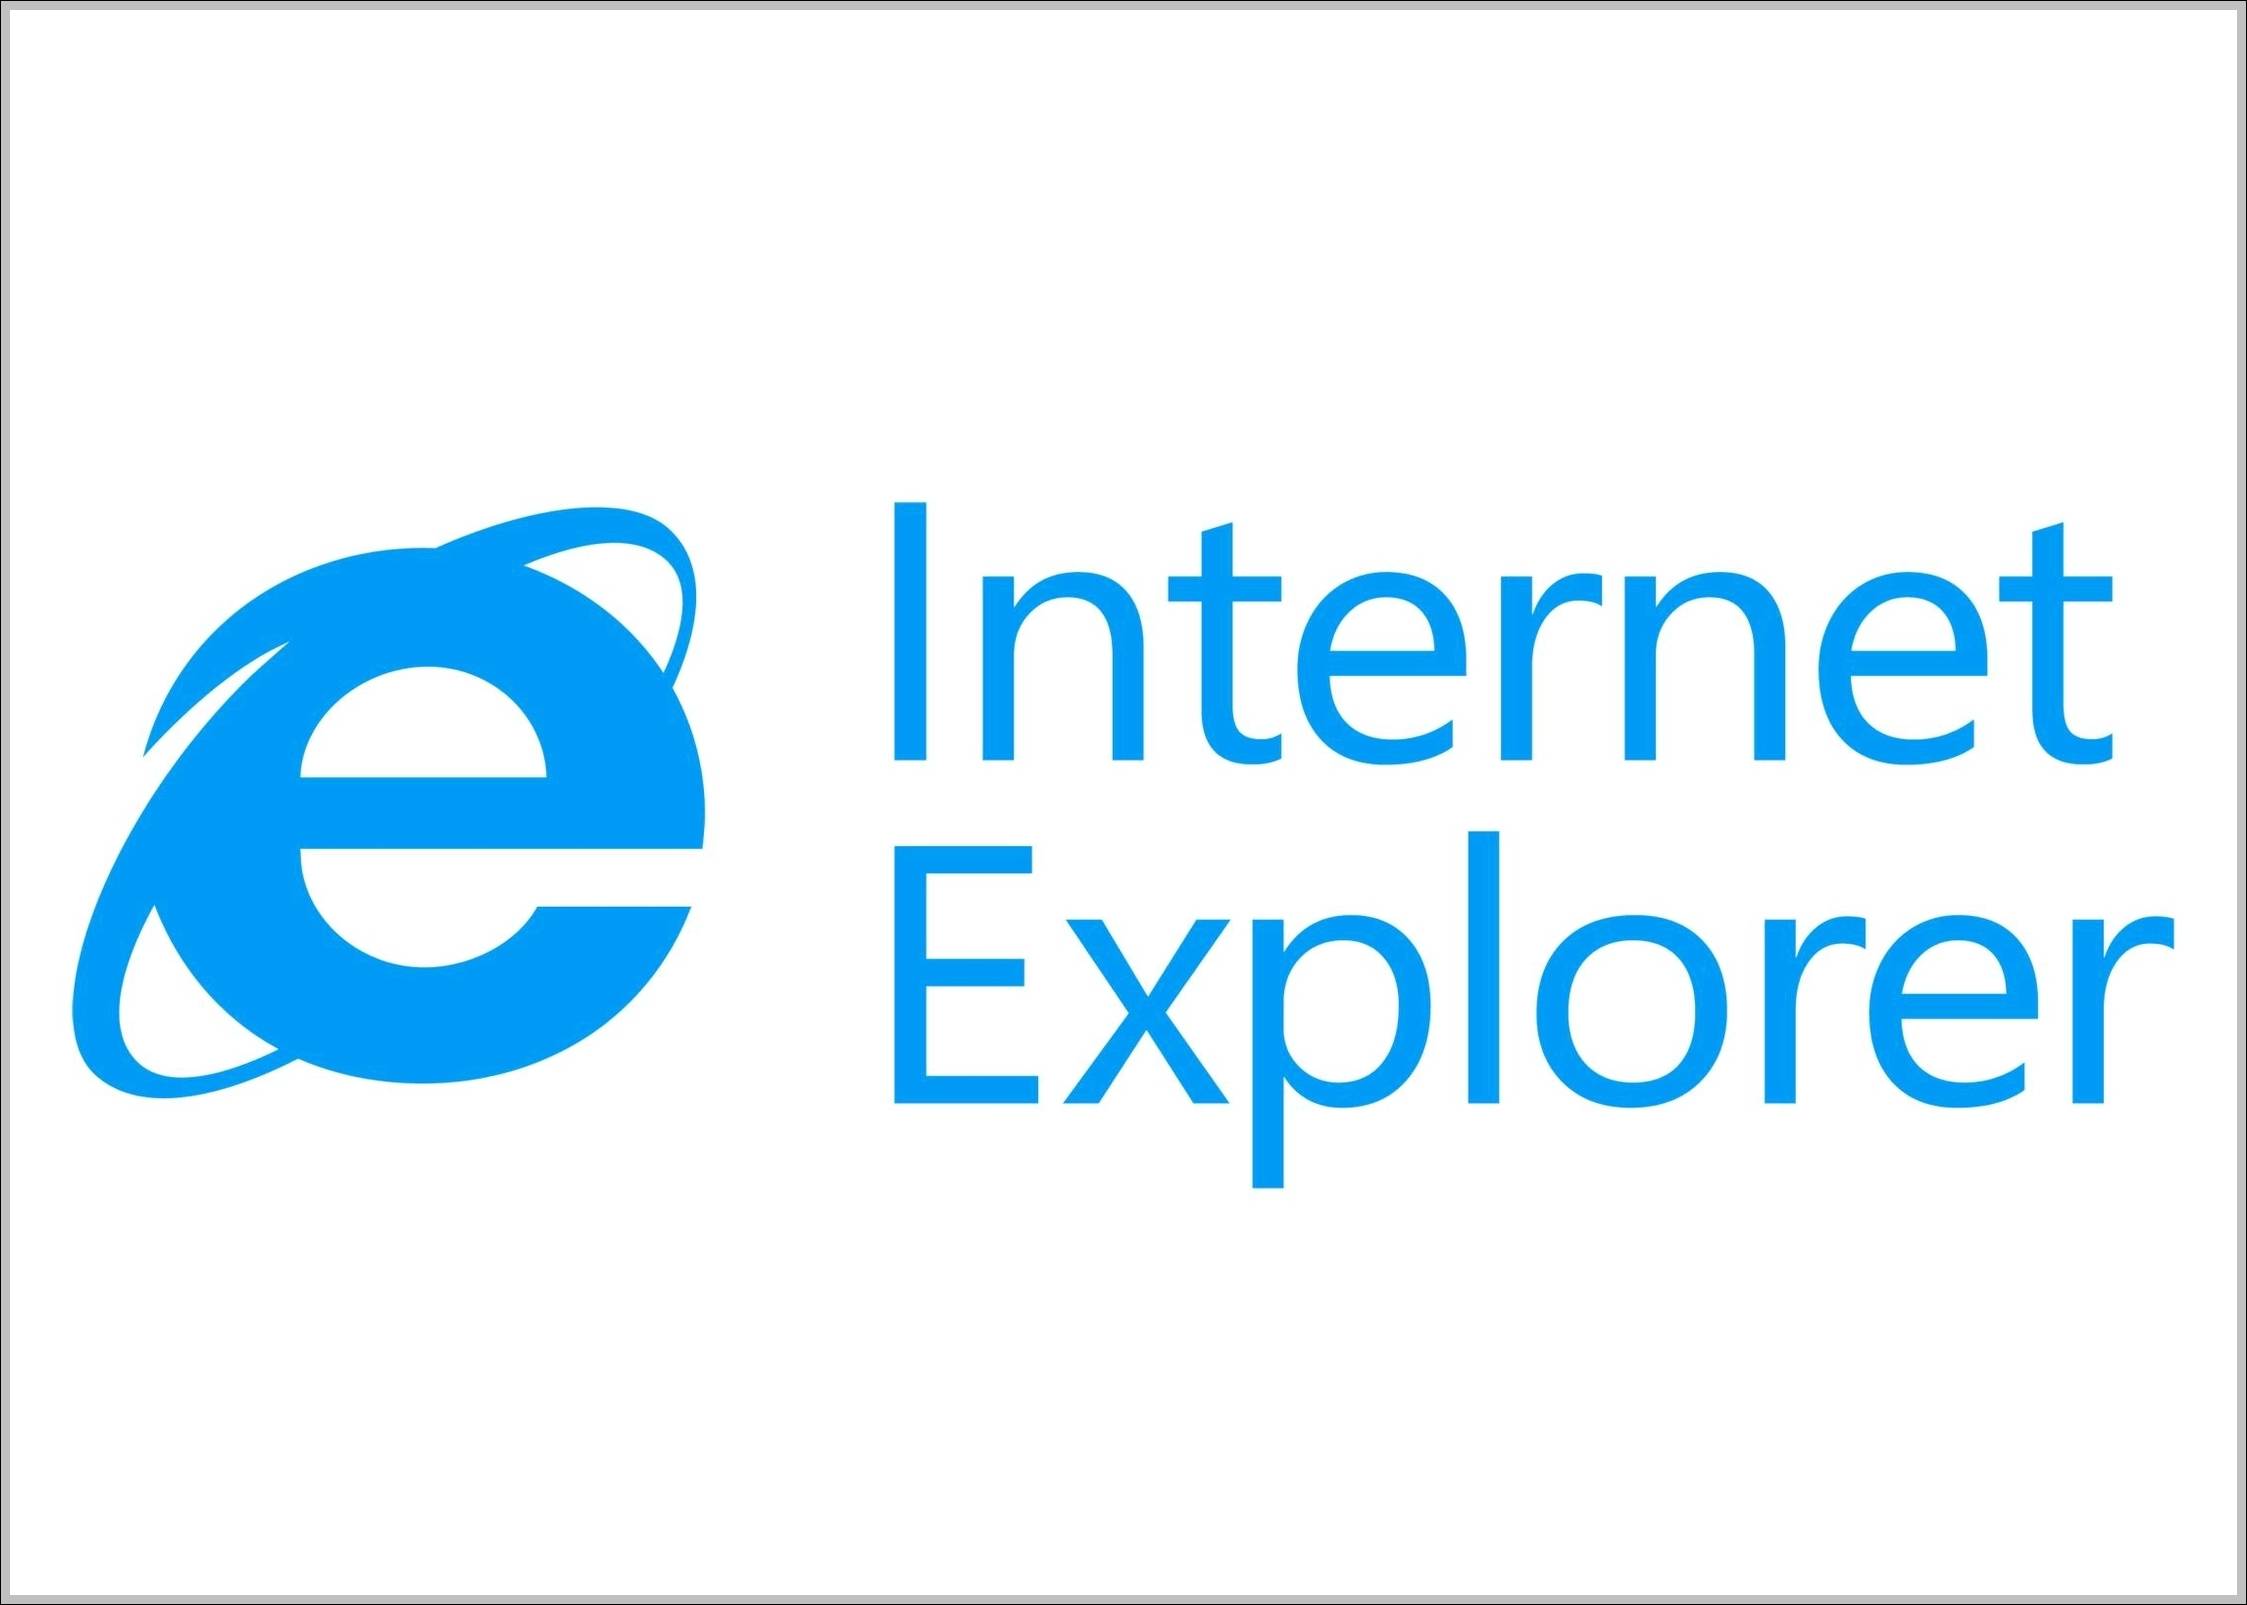 Internet Explorer logo and sign